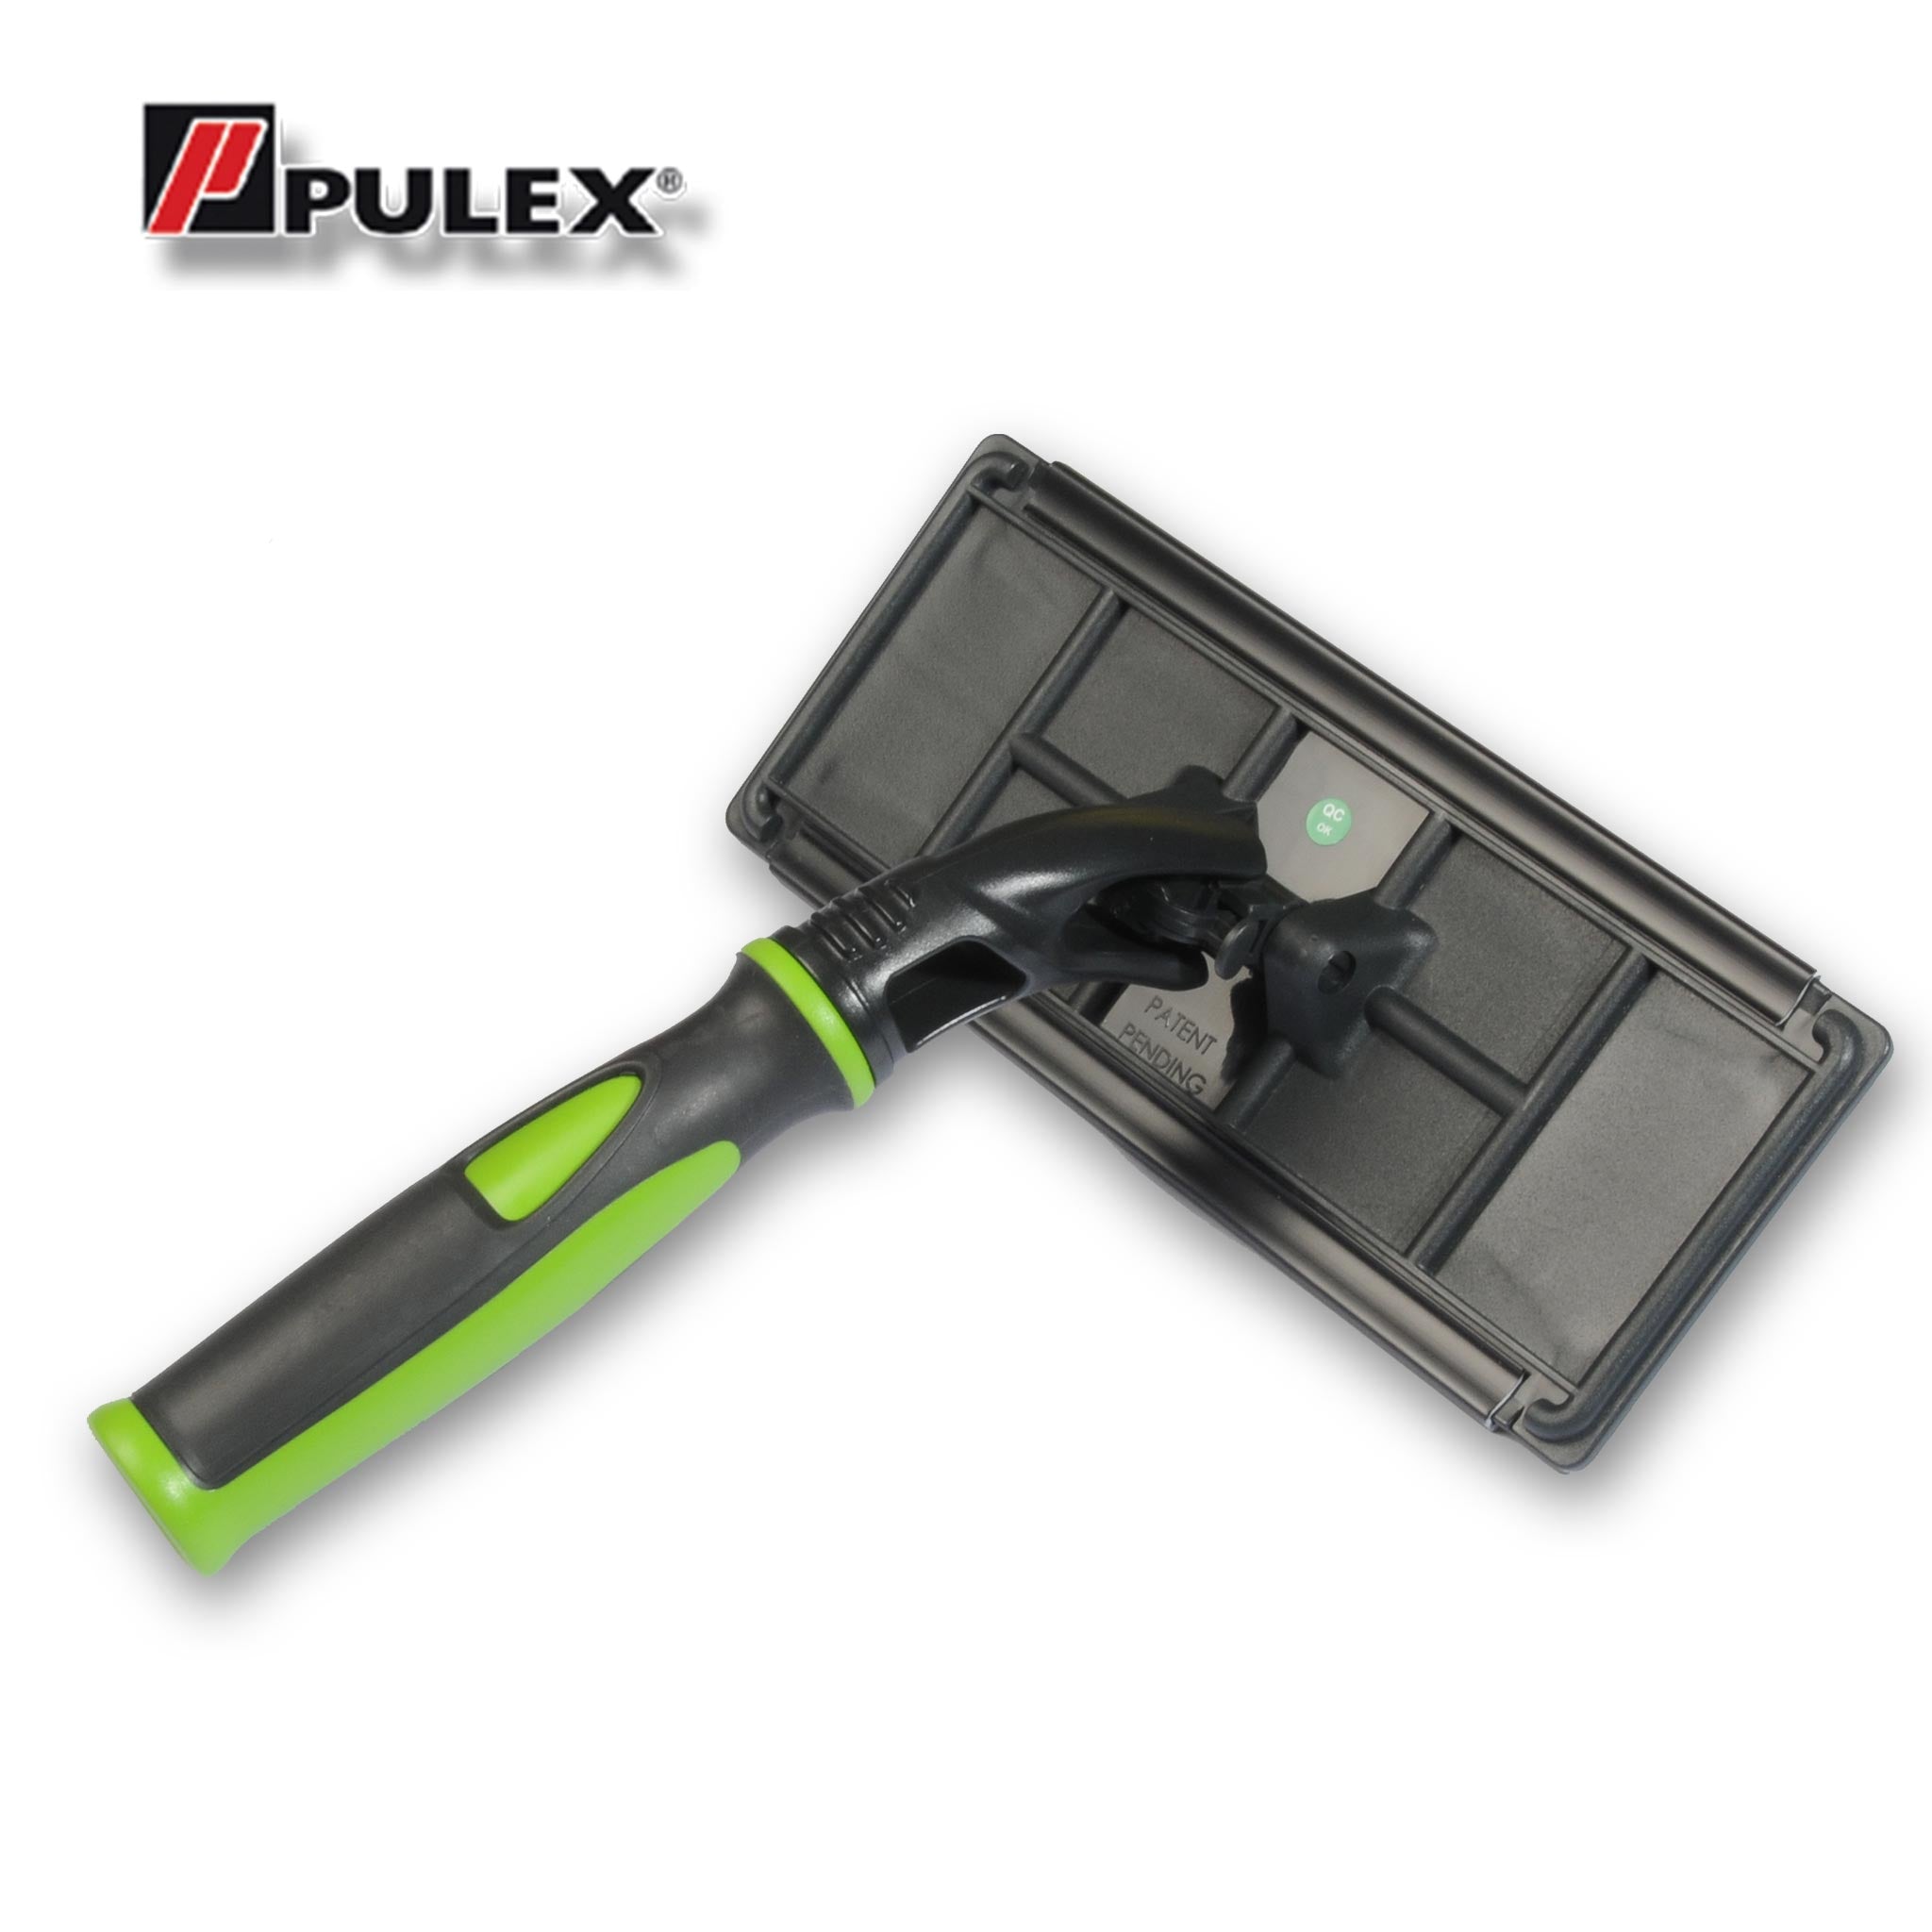 Pulex Cleano 10 Pad